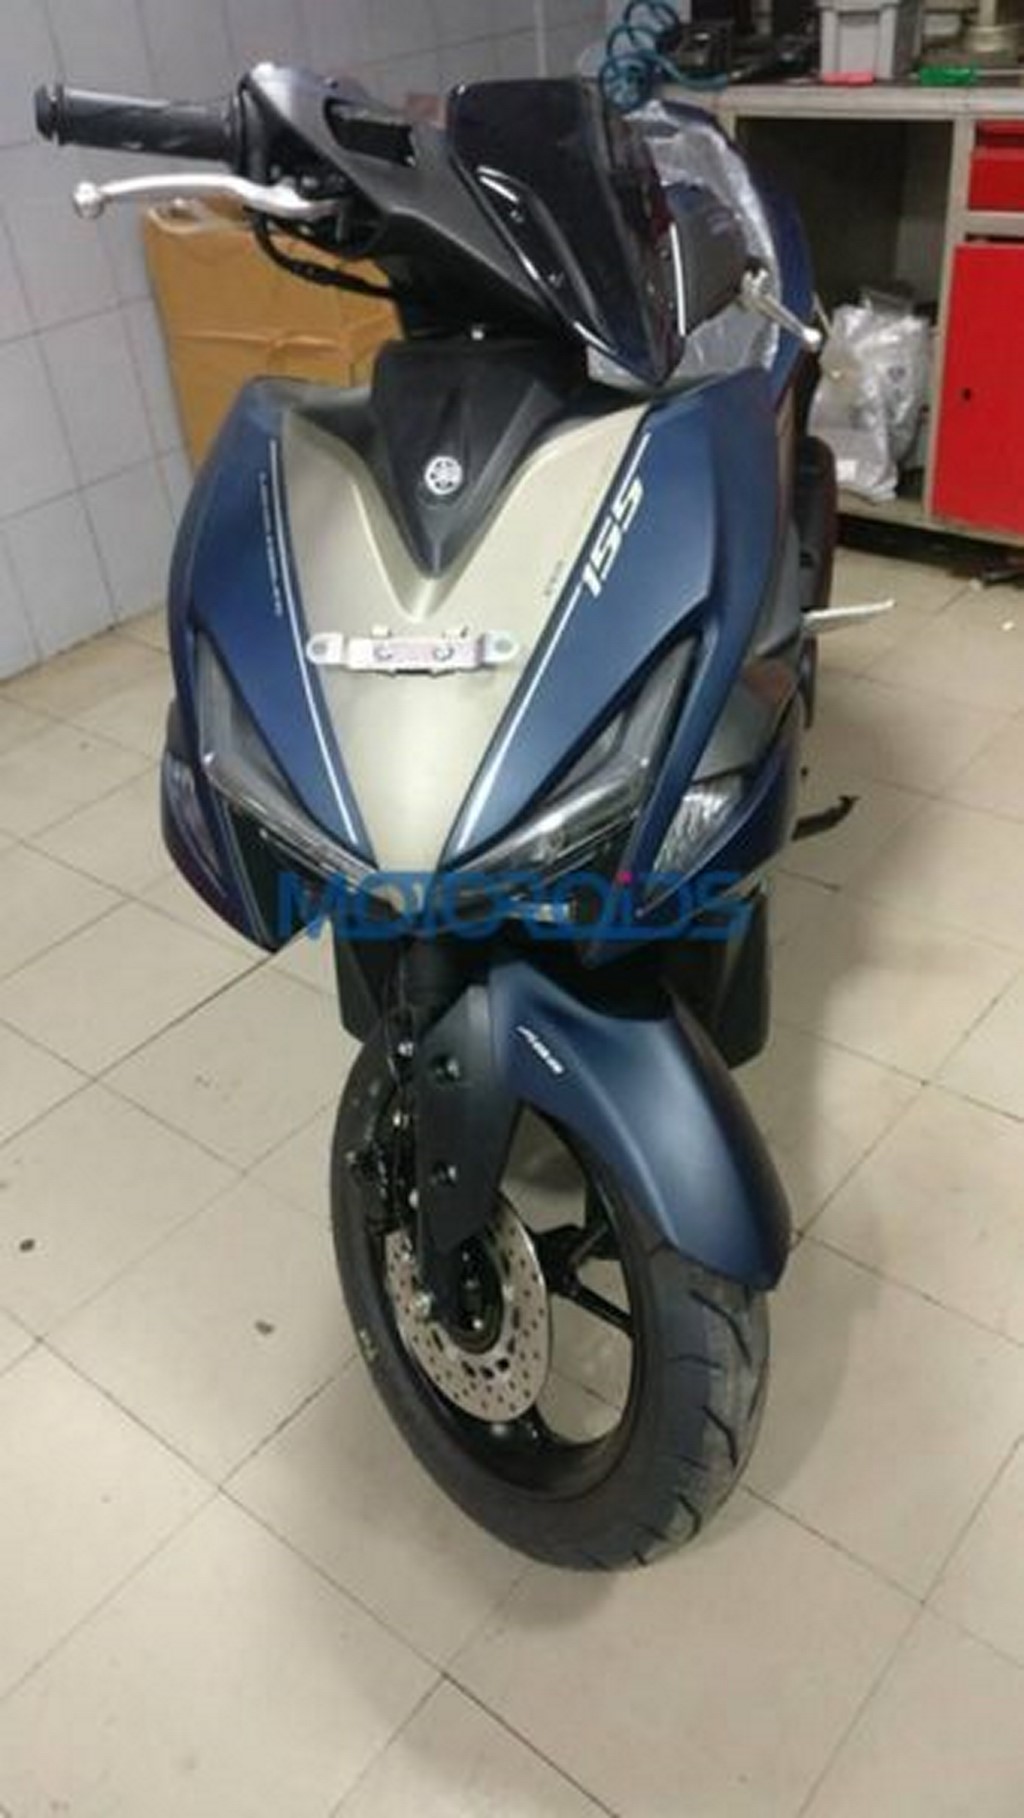 Yamaha Aerox 155cc Scooter Spotted